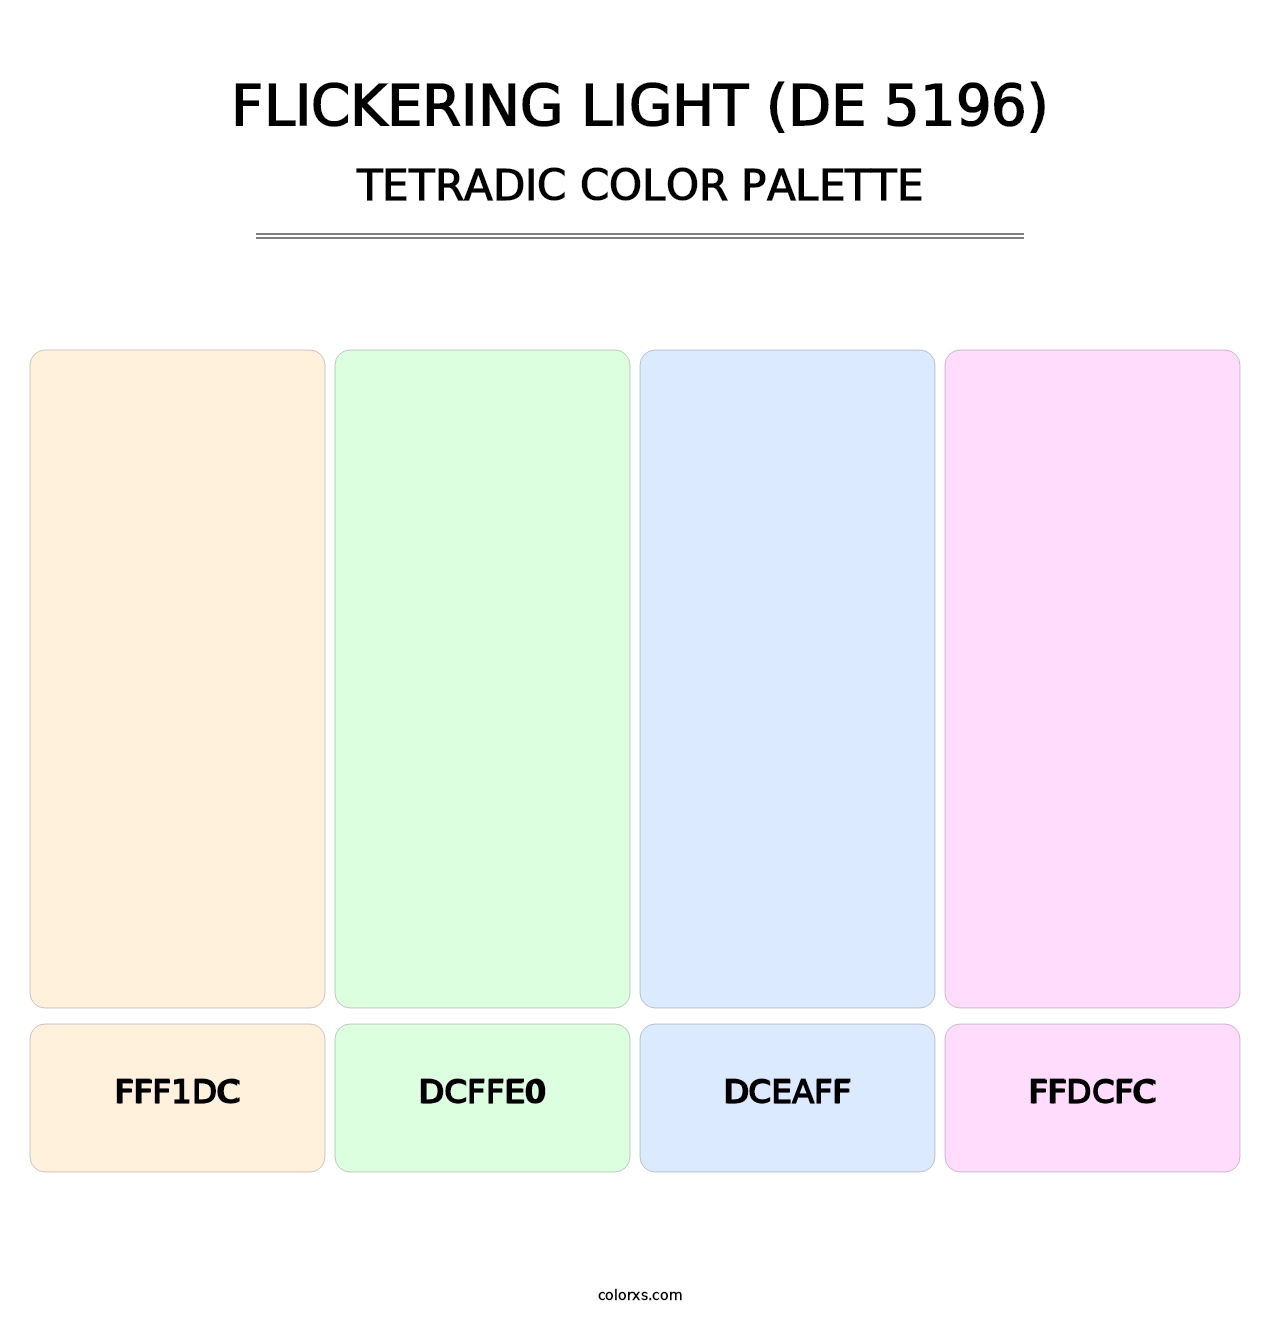 Flickering Light (DE 5196) - Tetradic Color Palette